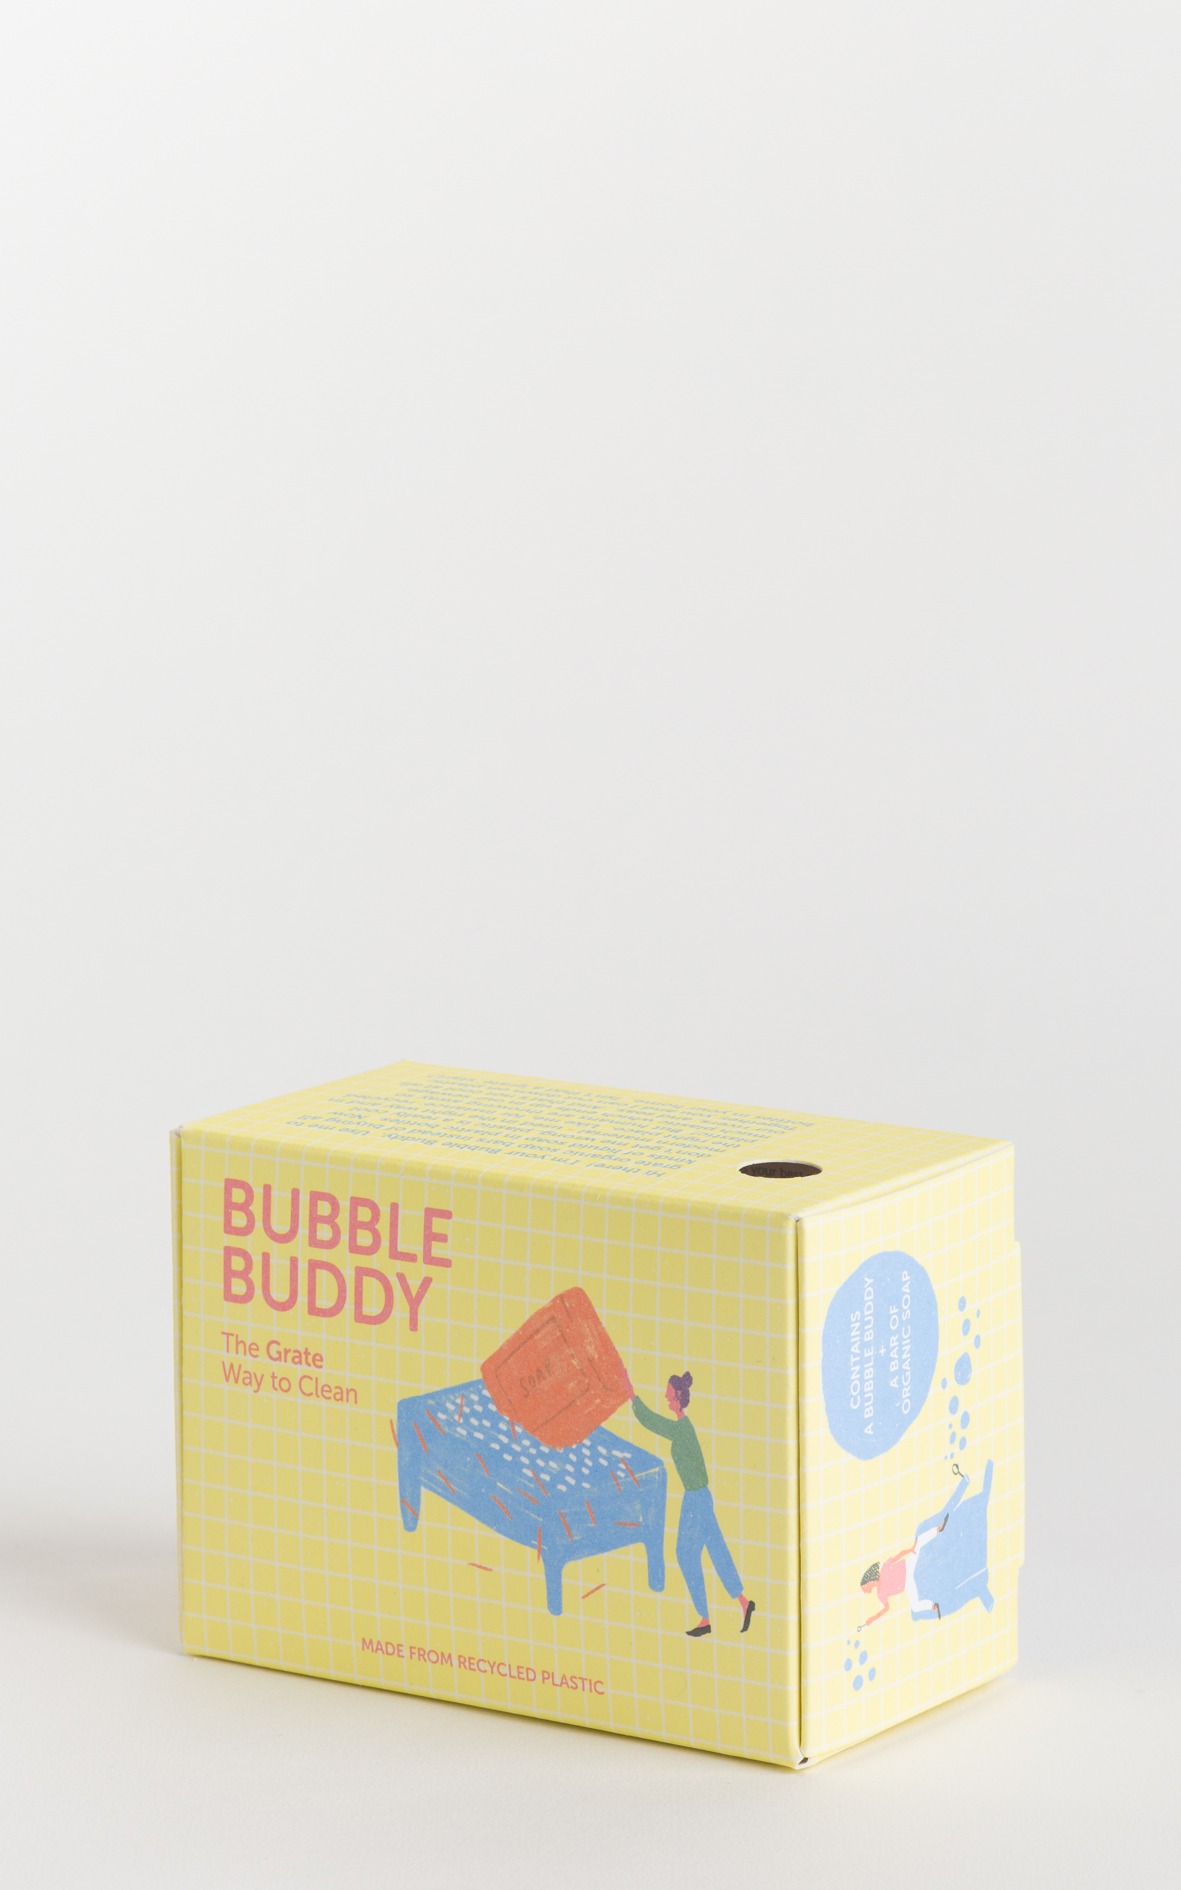 Bubble buddy packaging yellow